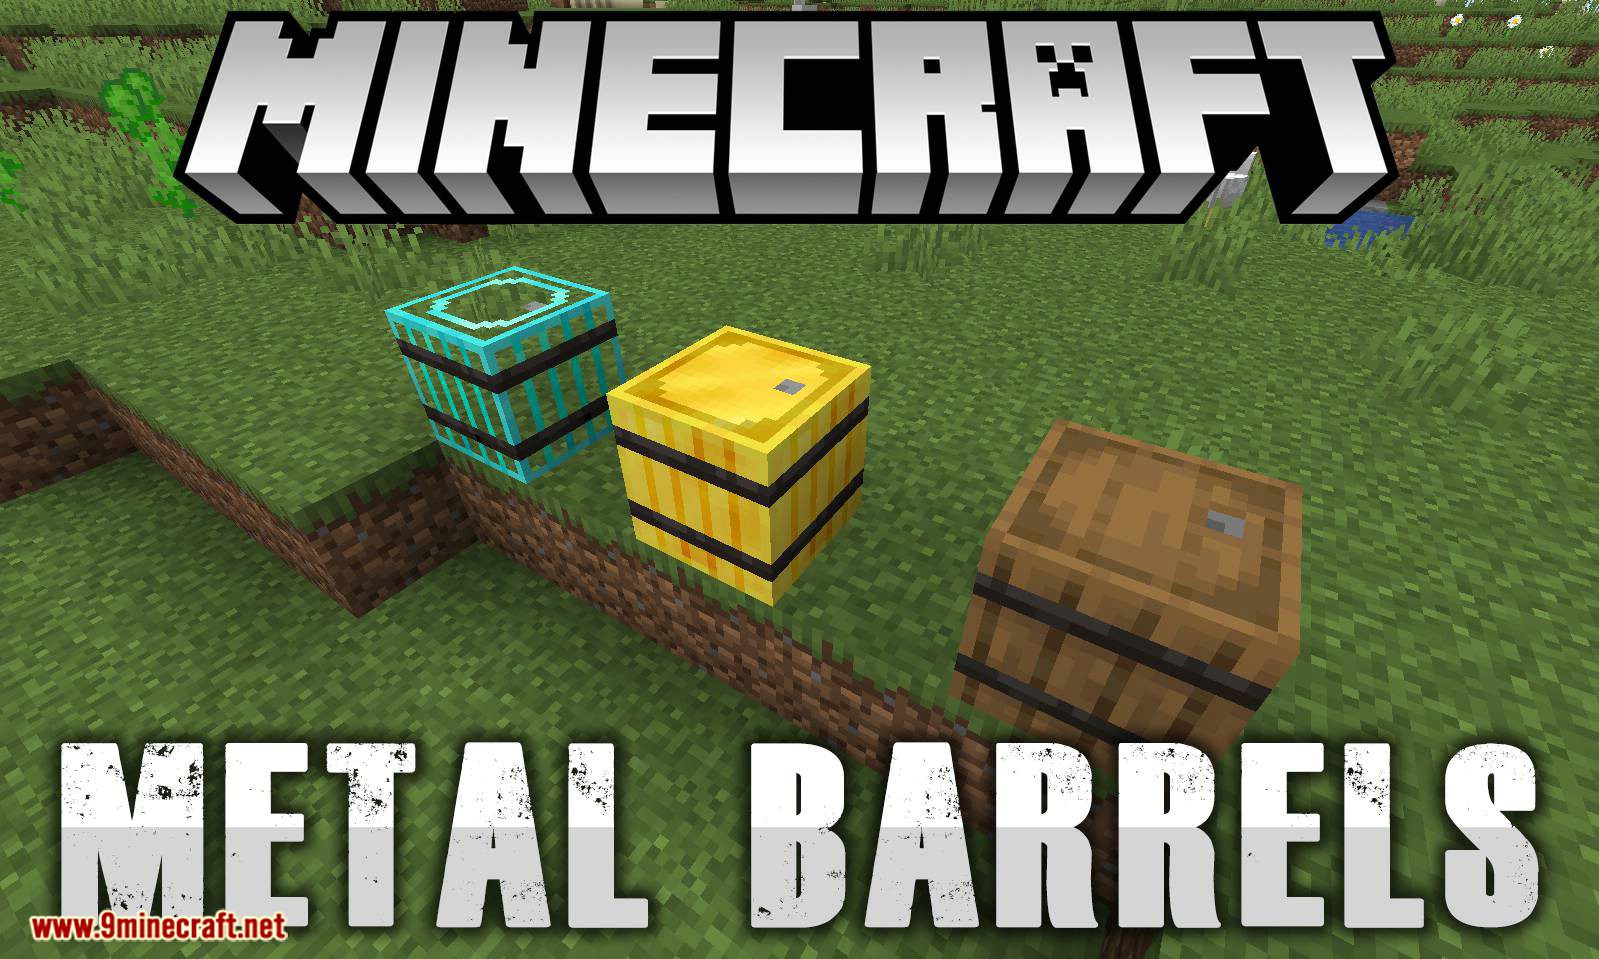 Metal Barrels mod for minecraft logo